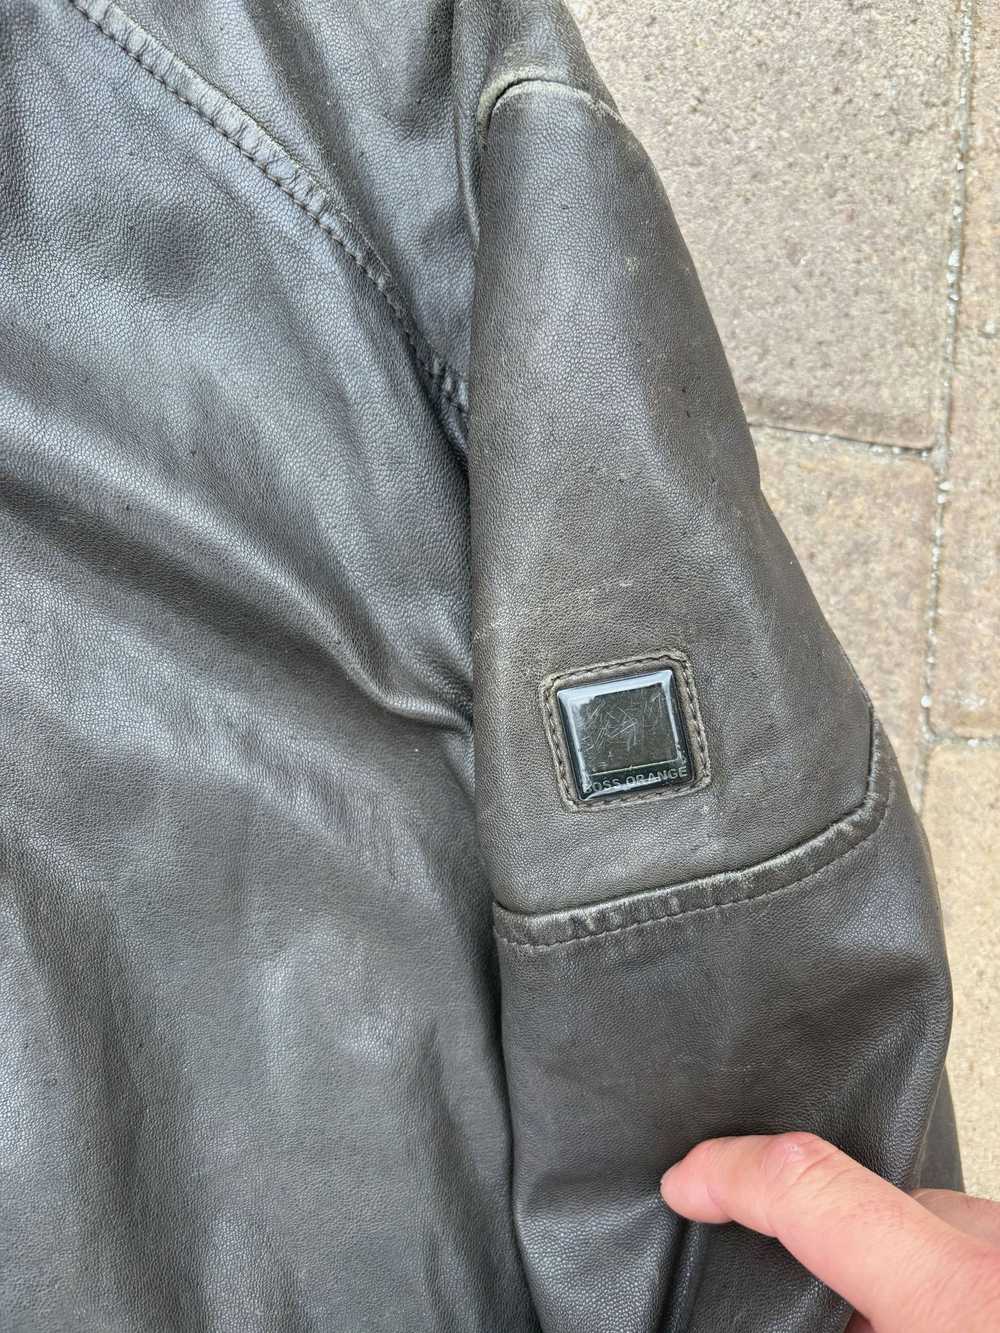 Hugo Boss Hugo Boss Leather Jacket - image 2